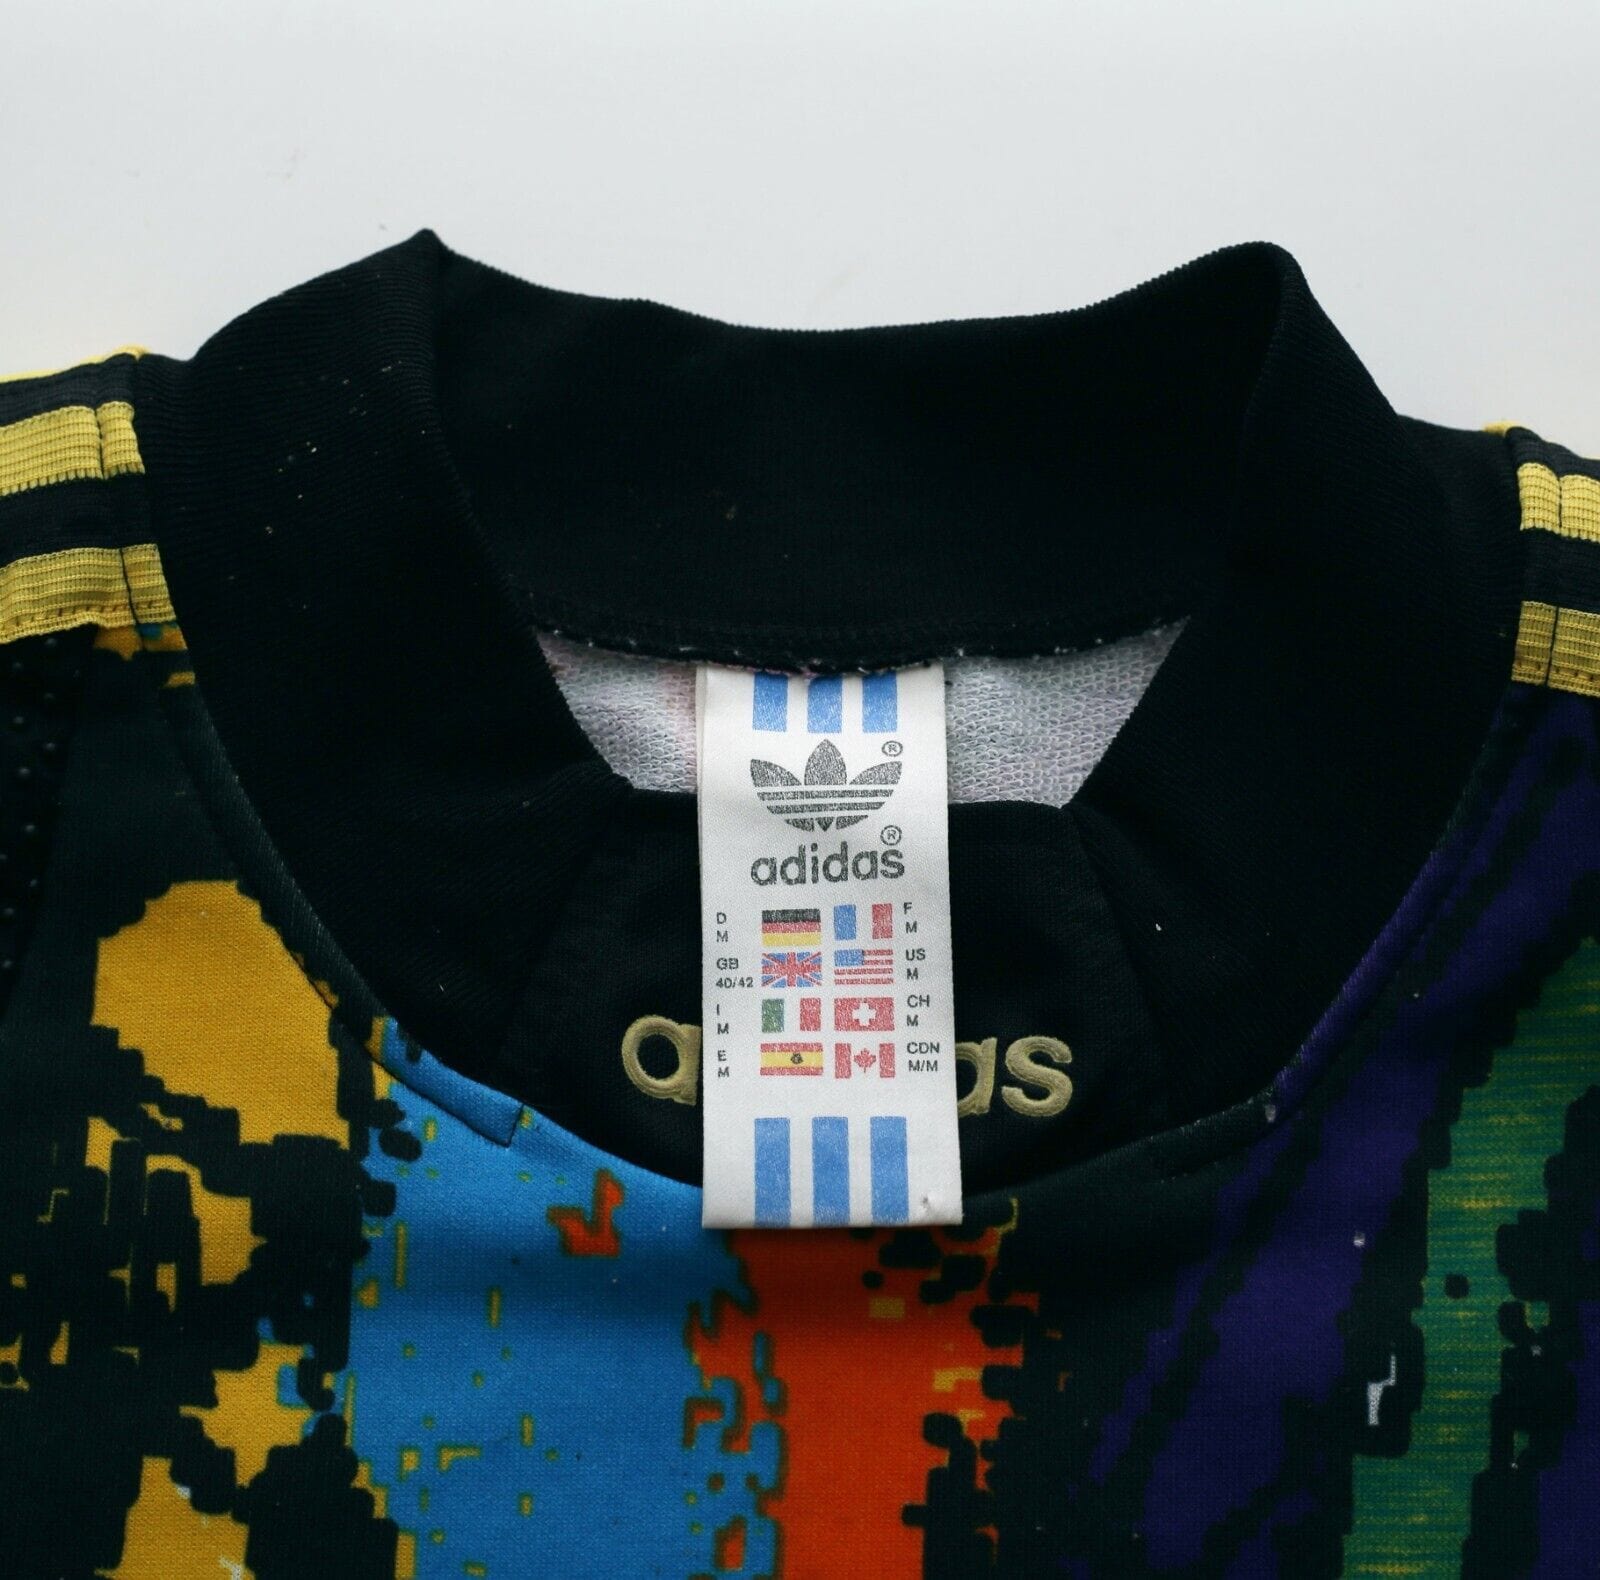 1992/93 Adidas Goalkeeper Football Shirt - Large – The Vintage Store